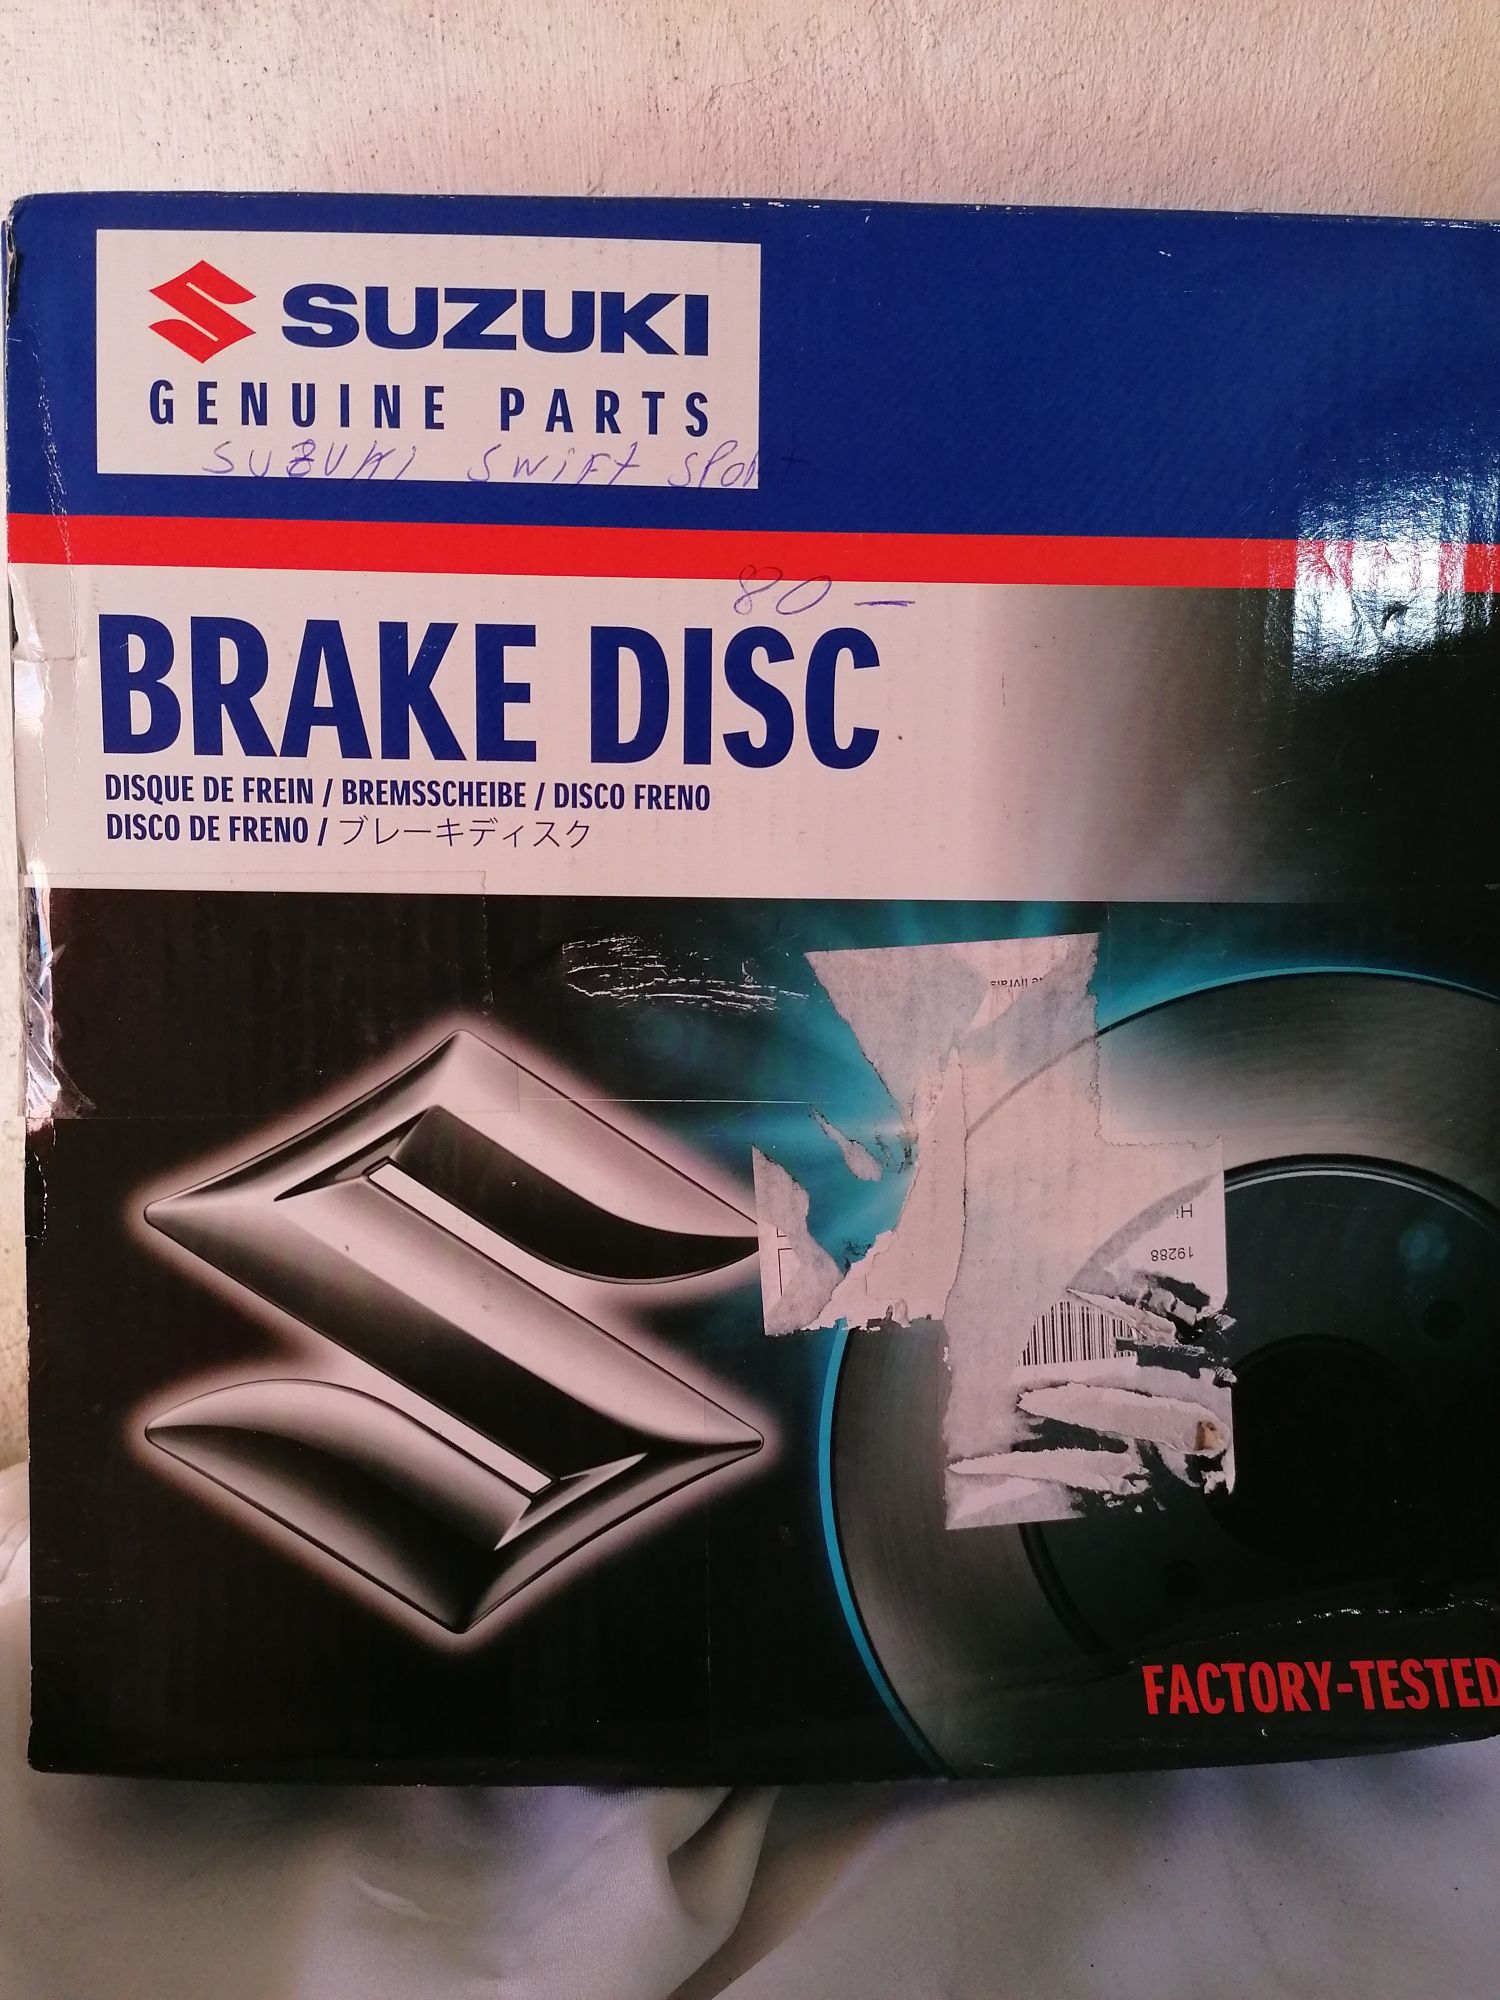 Discos Suzuki novos